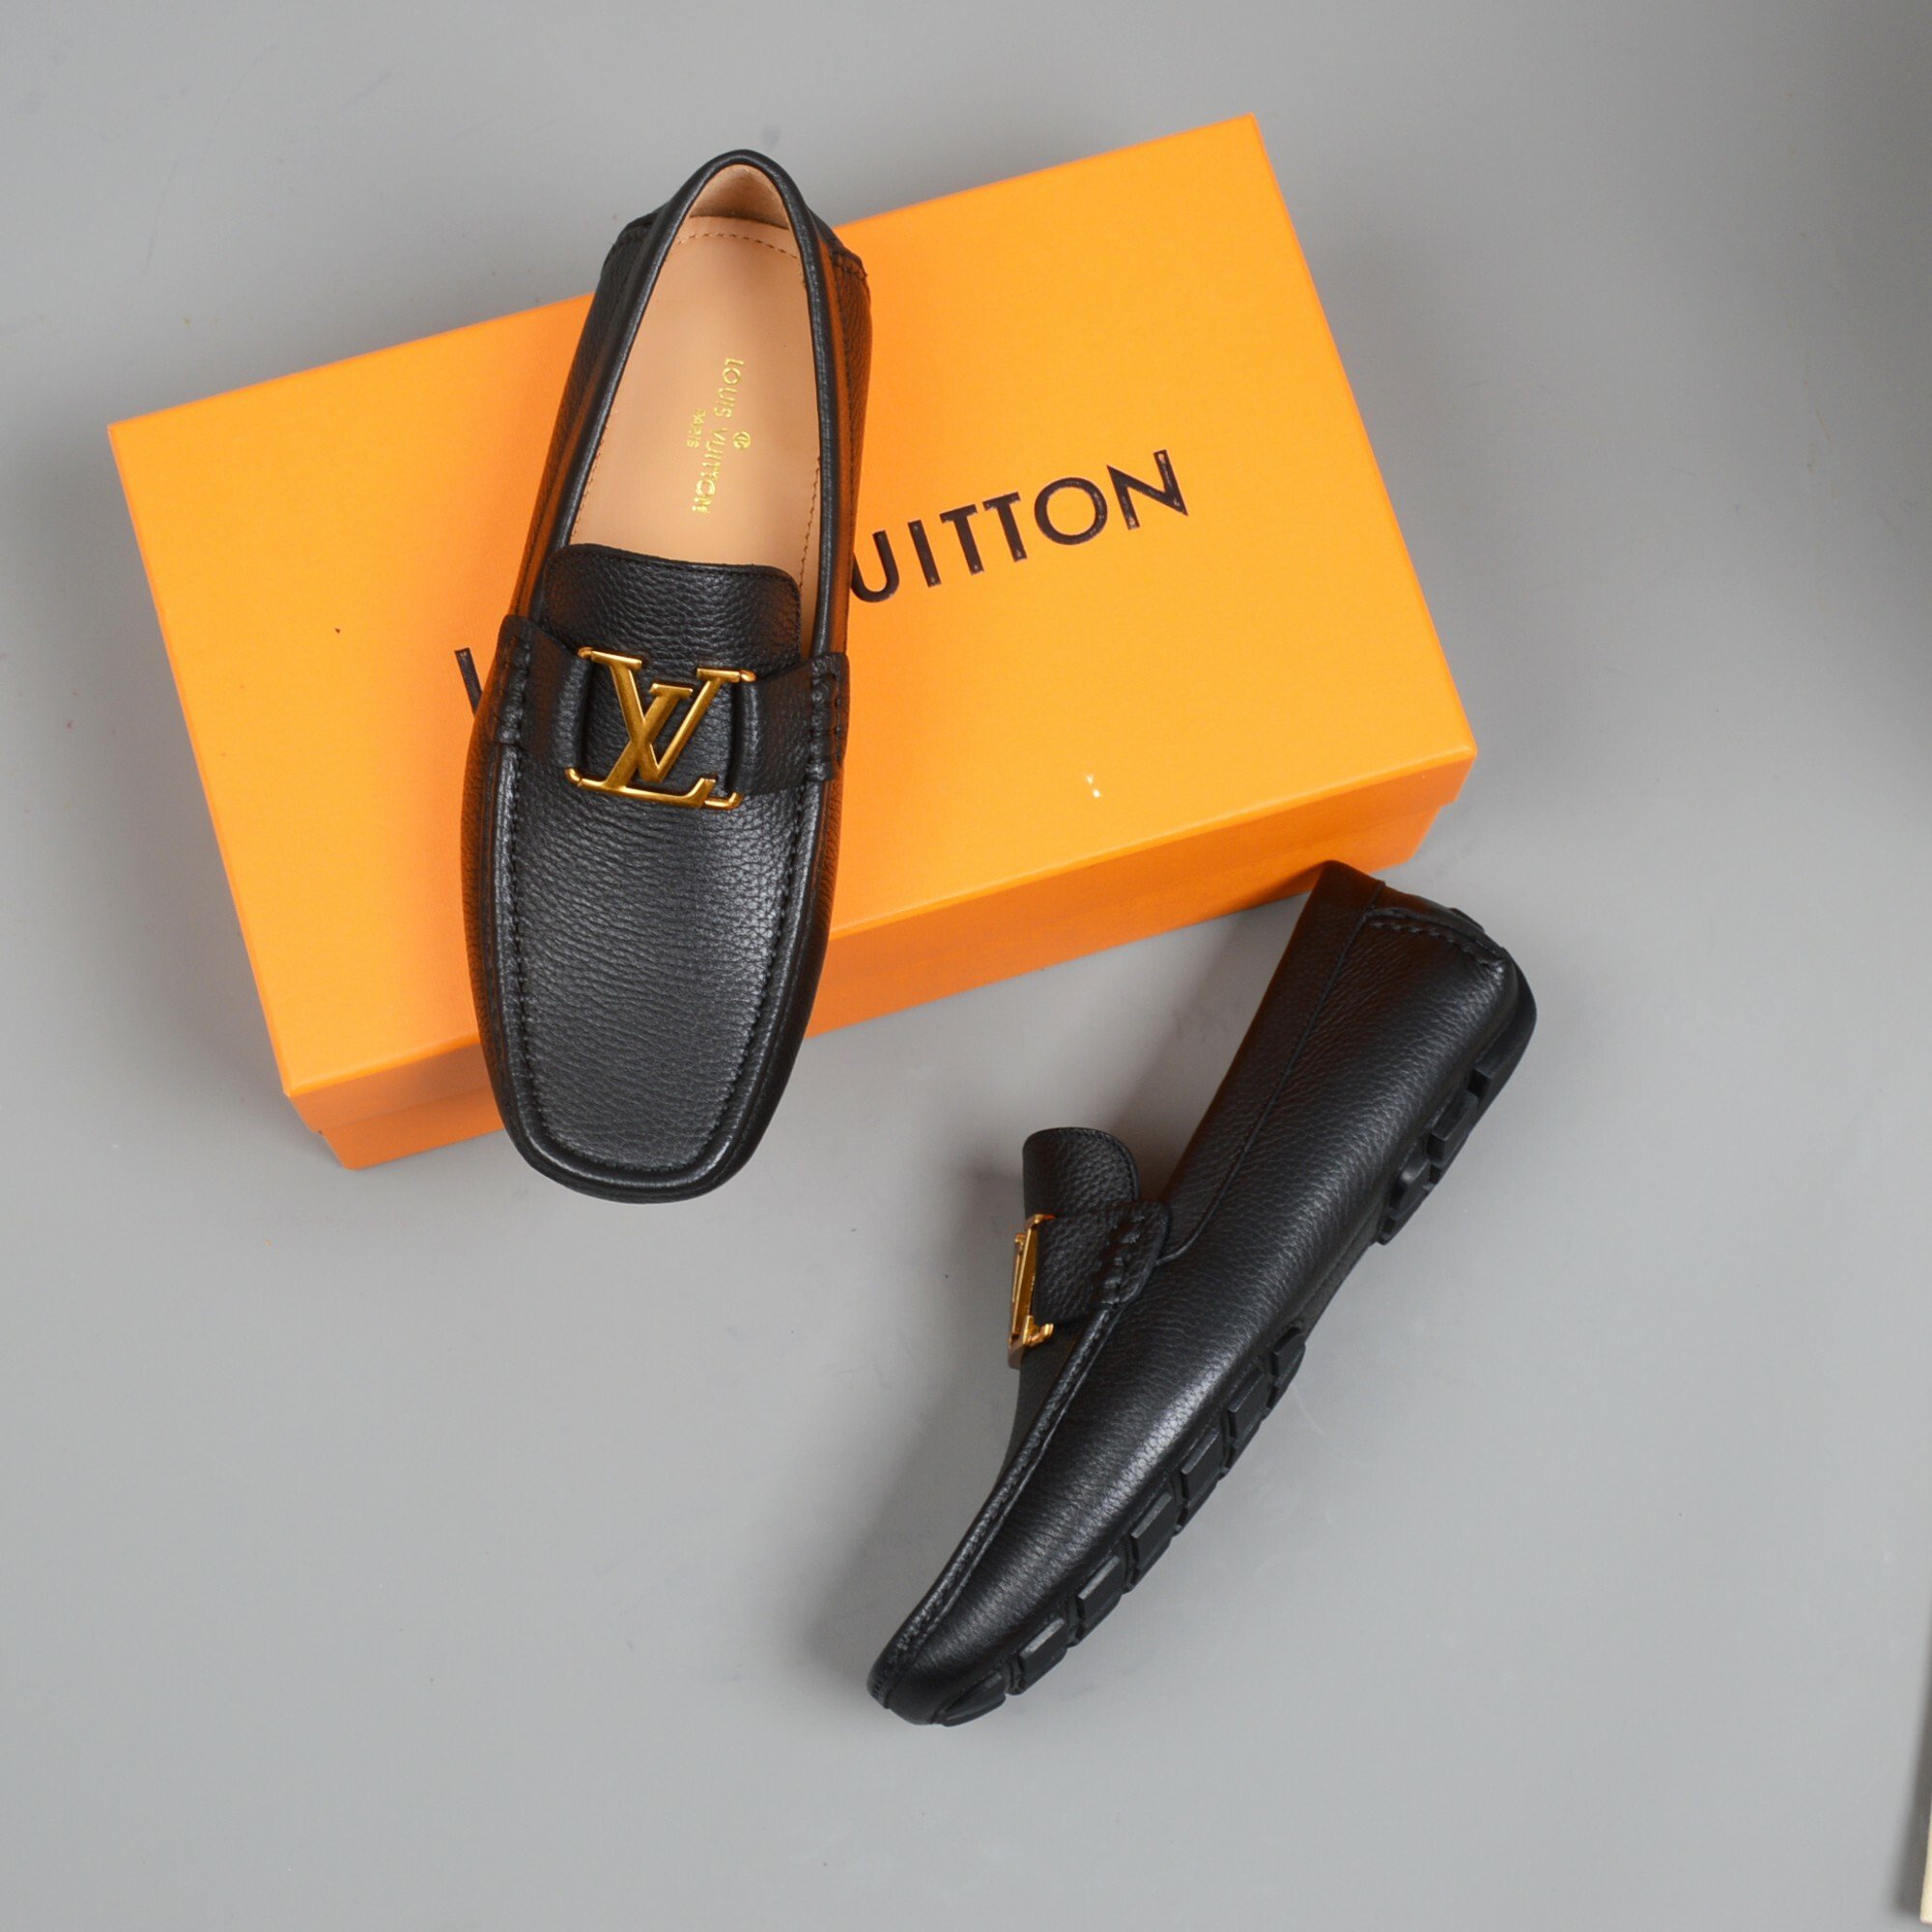 Pre-Love unboxing and reveal of the Louis Vuitton Lexington